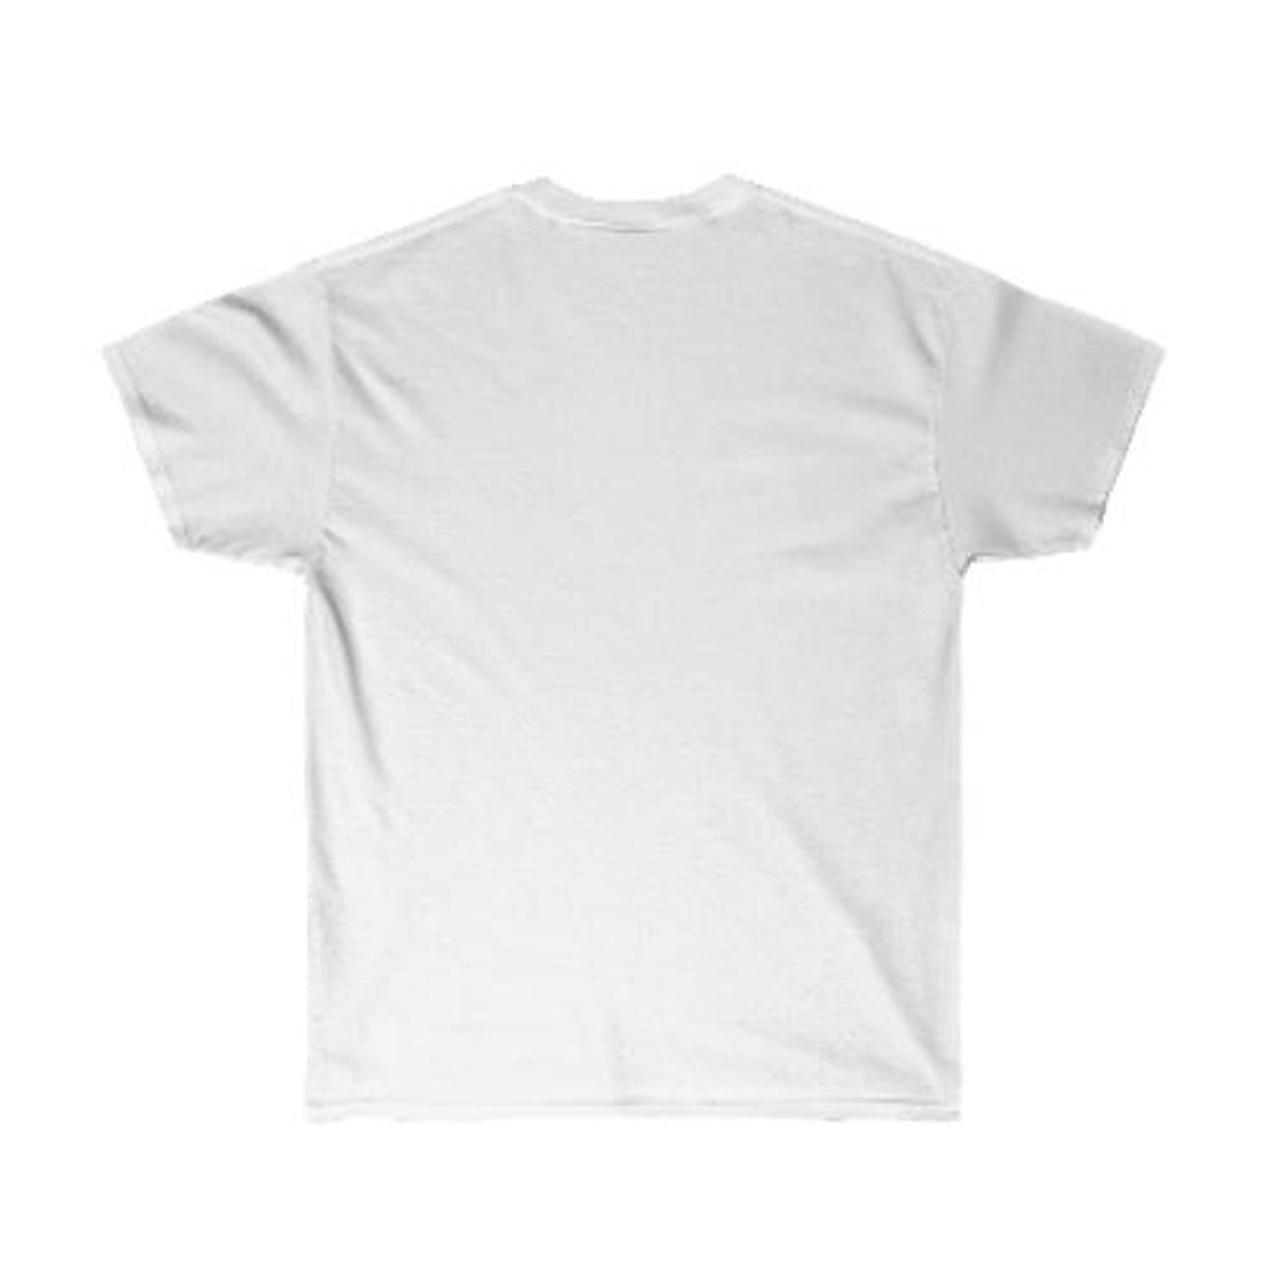 Women's Grey and White T-shirt | Depop